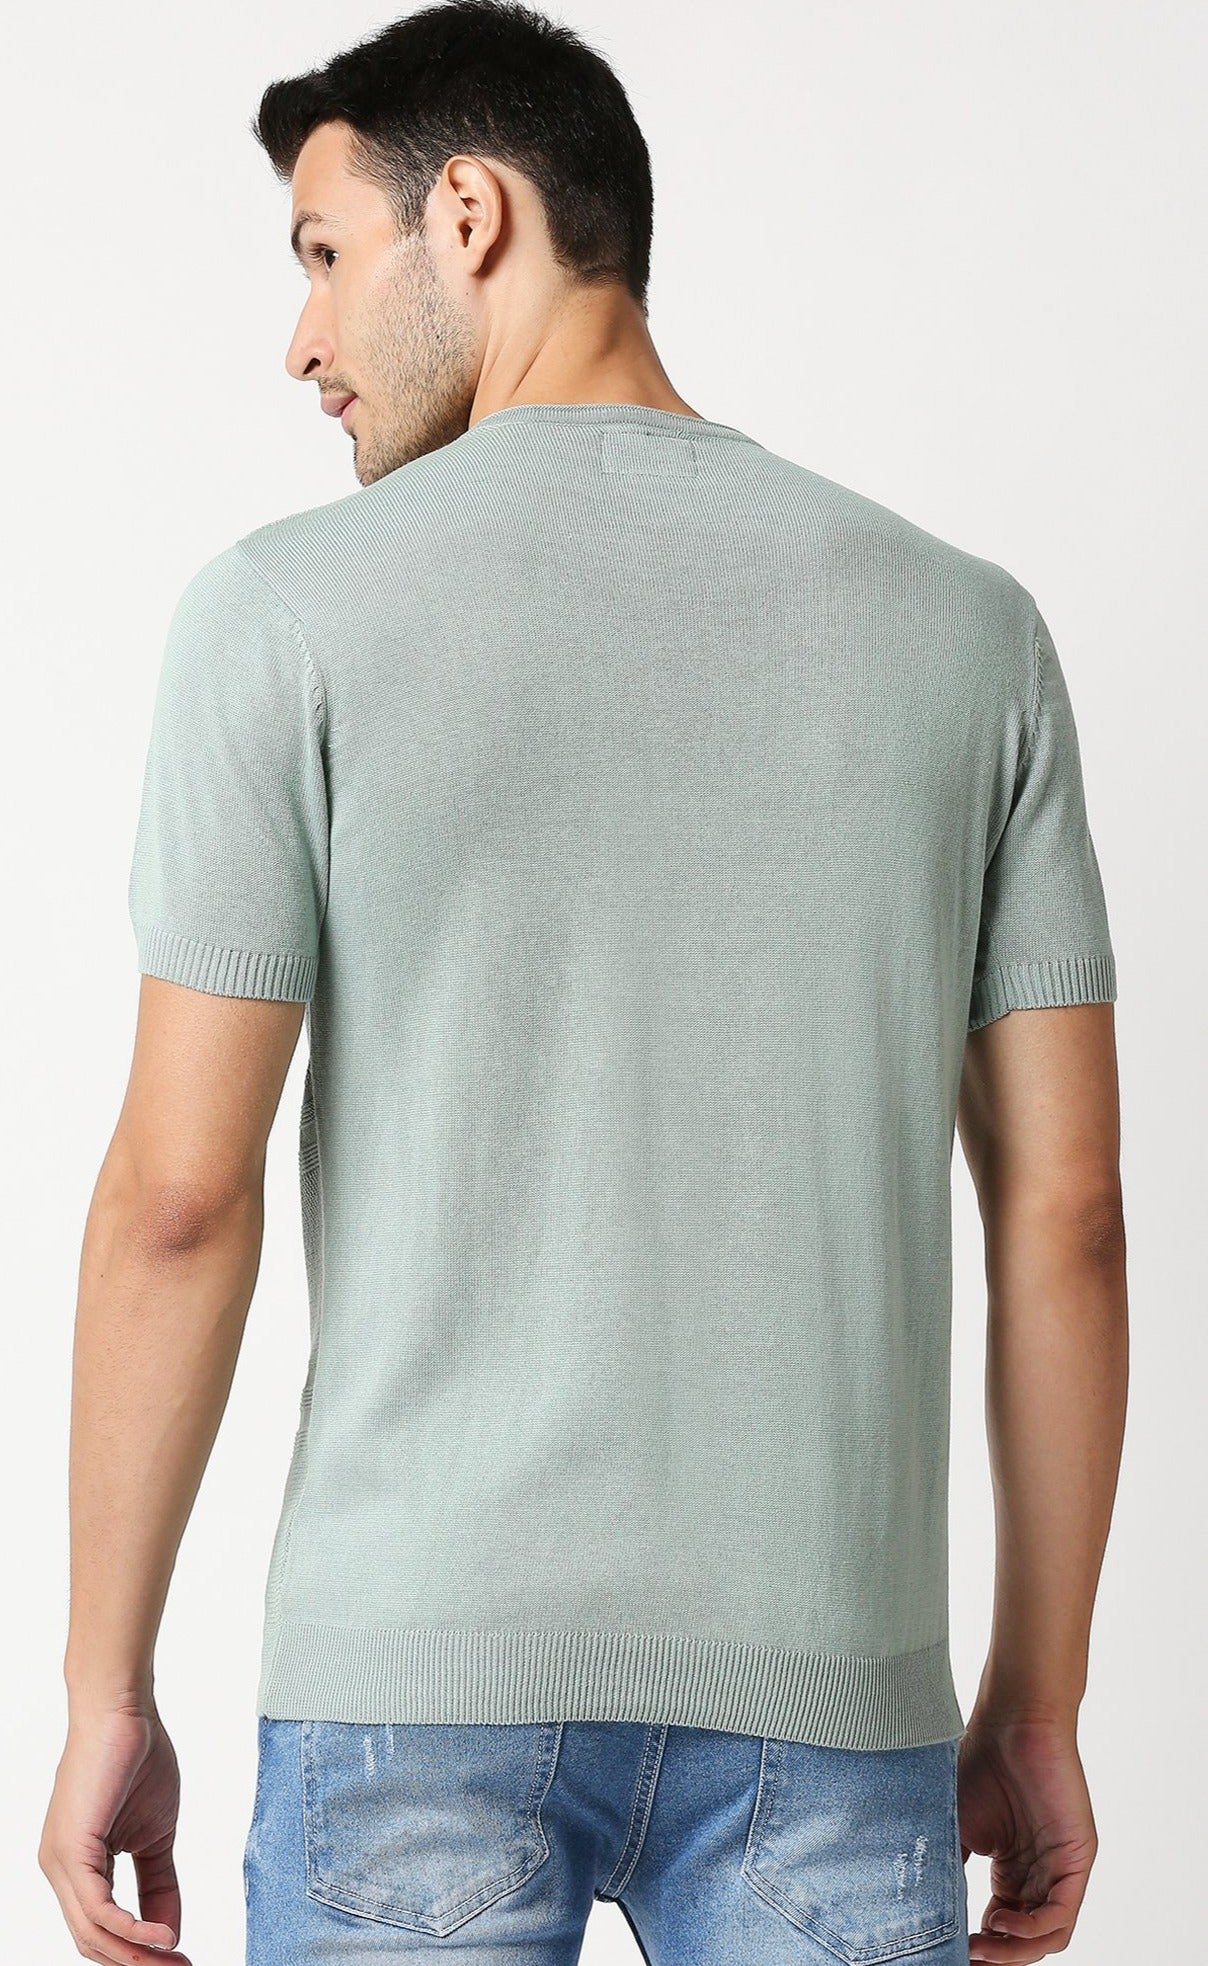 Fostino Escape Green Round Neck T-Shirt - Fostino - T-Shirts